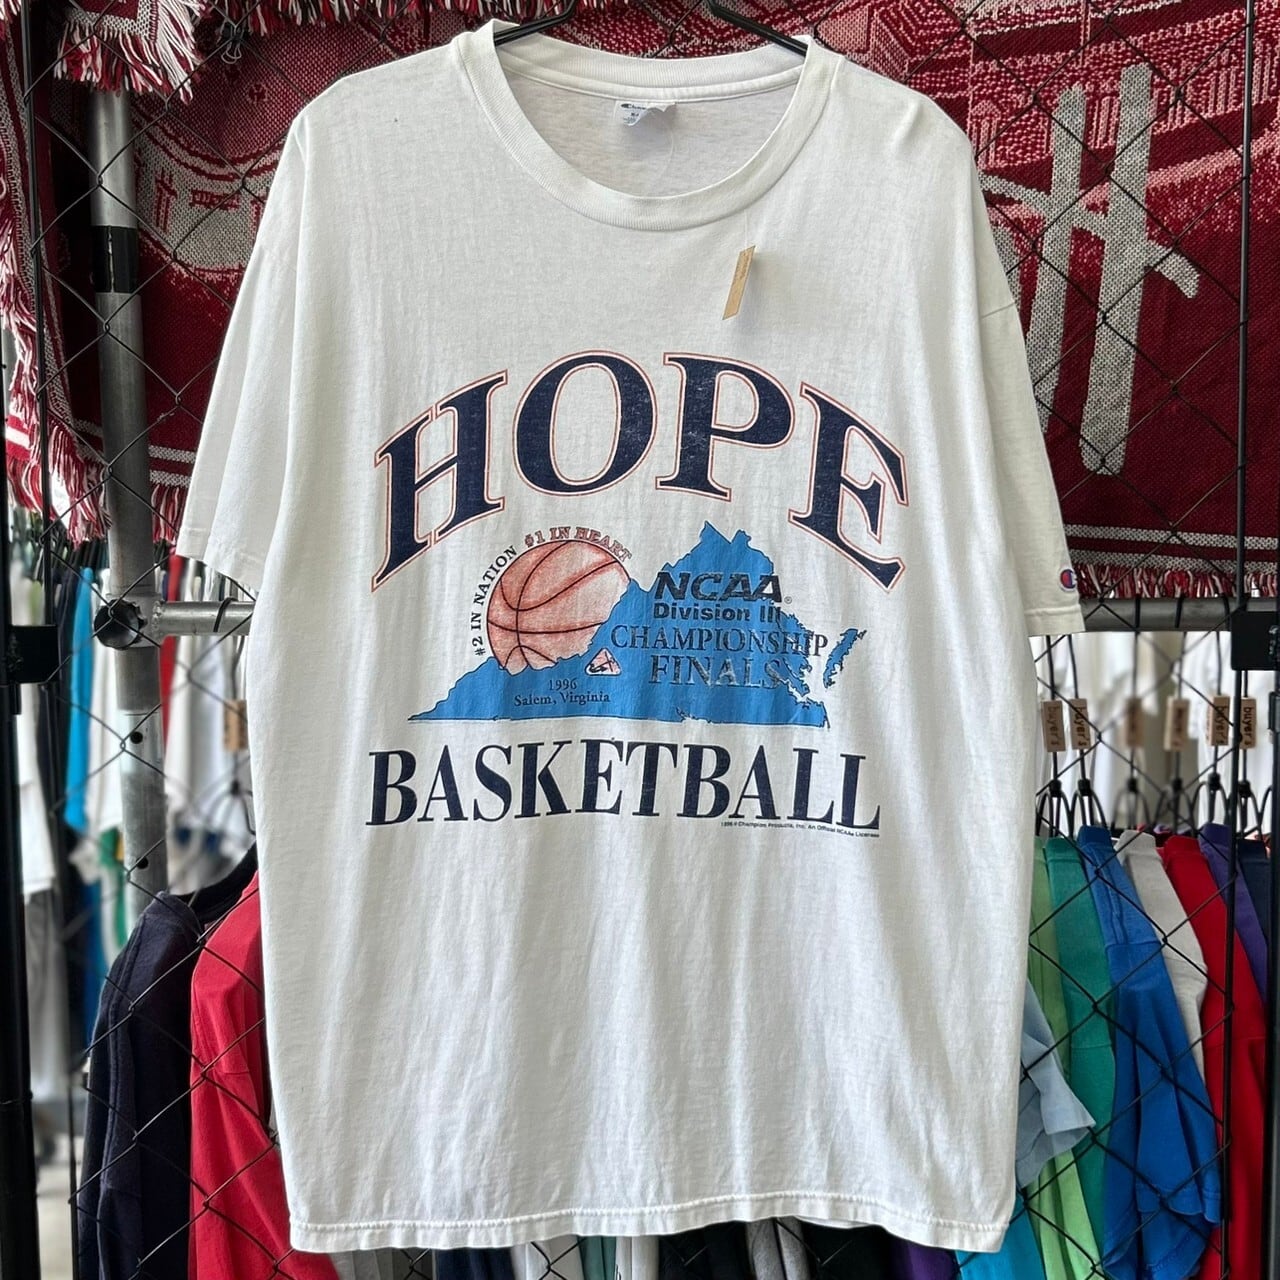 90s basketball vintage バスケ ヴィンテージ 半袖 T